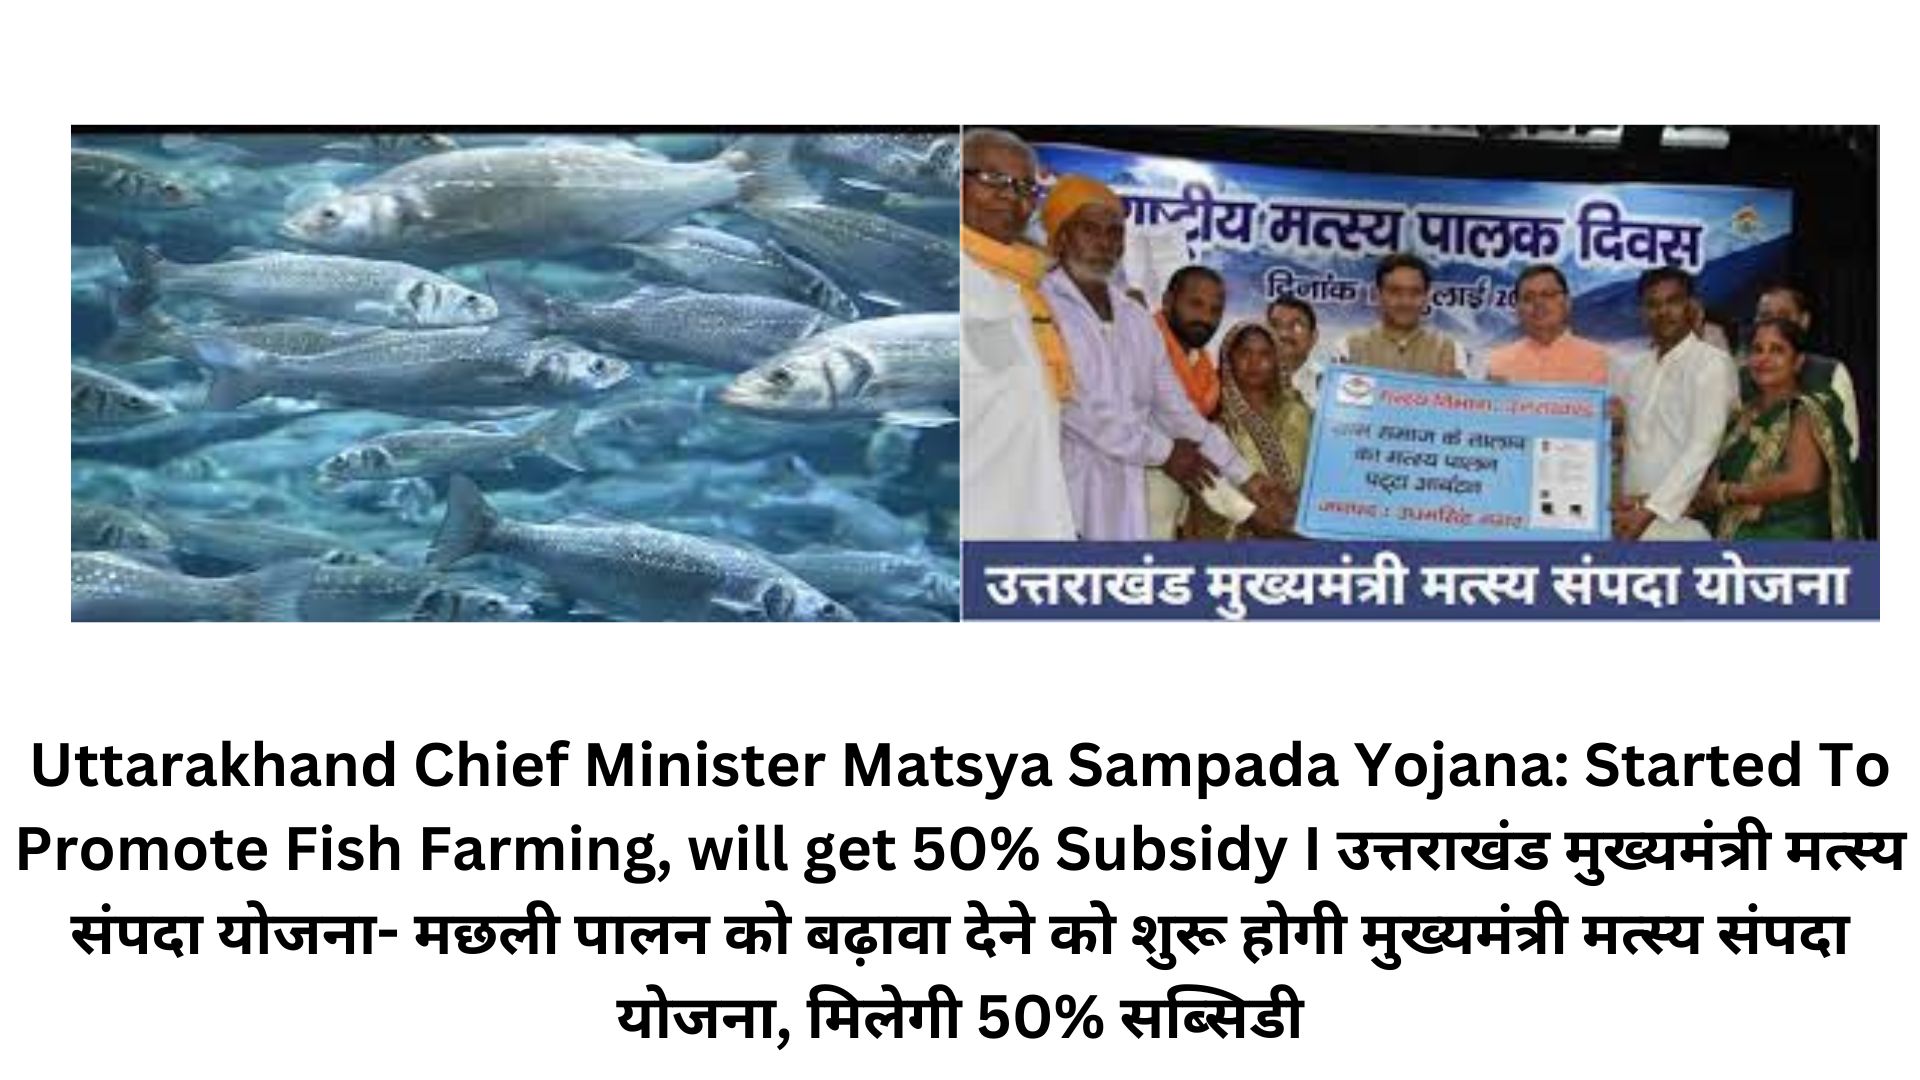 Uttarakhand Chief Minister Matsya Sampada Yojana: Started To Promote Fish Farming, will get 50% Subsidy I उत्तराखंड मुख्यमंत्री मत्स्य संपदा योजना- मछली पालन को बढ़ावा देने को शुरू होगी मुख्यमंत्री मत्स्य संपदा योजना, मिलेगी 50% सब्सिडी